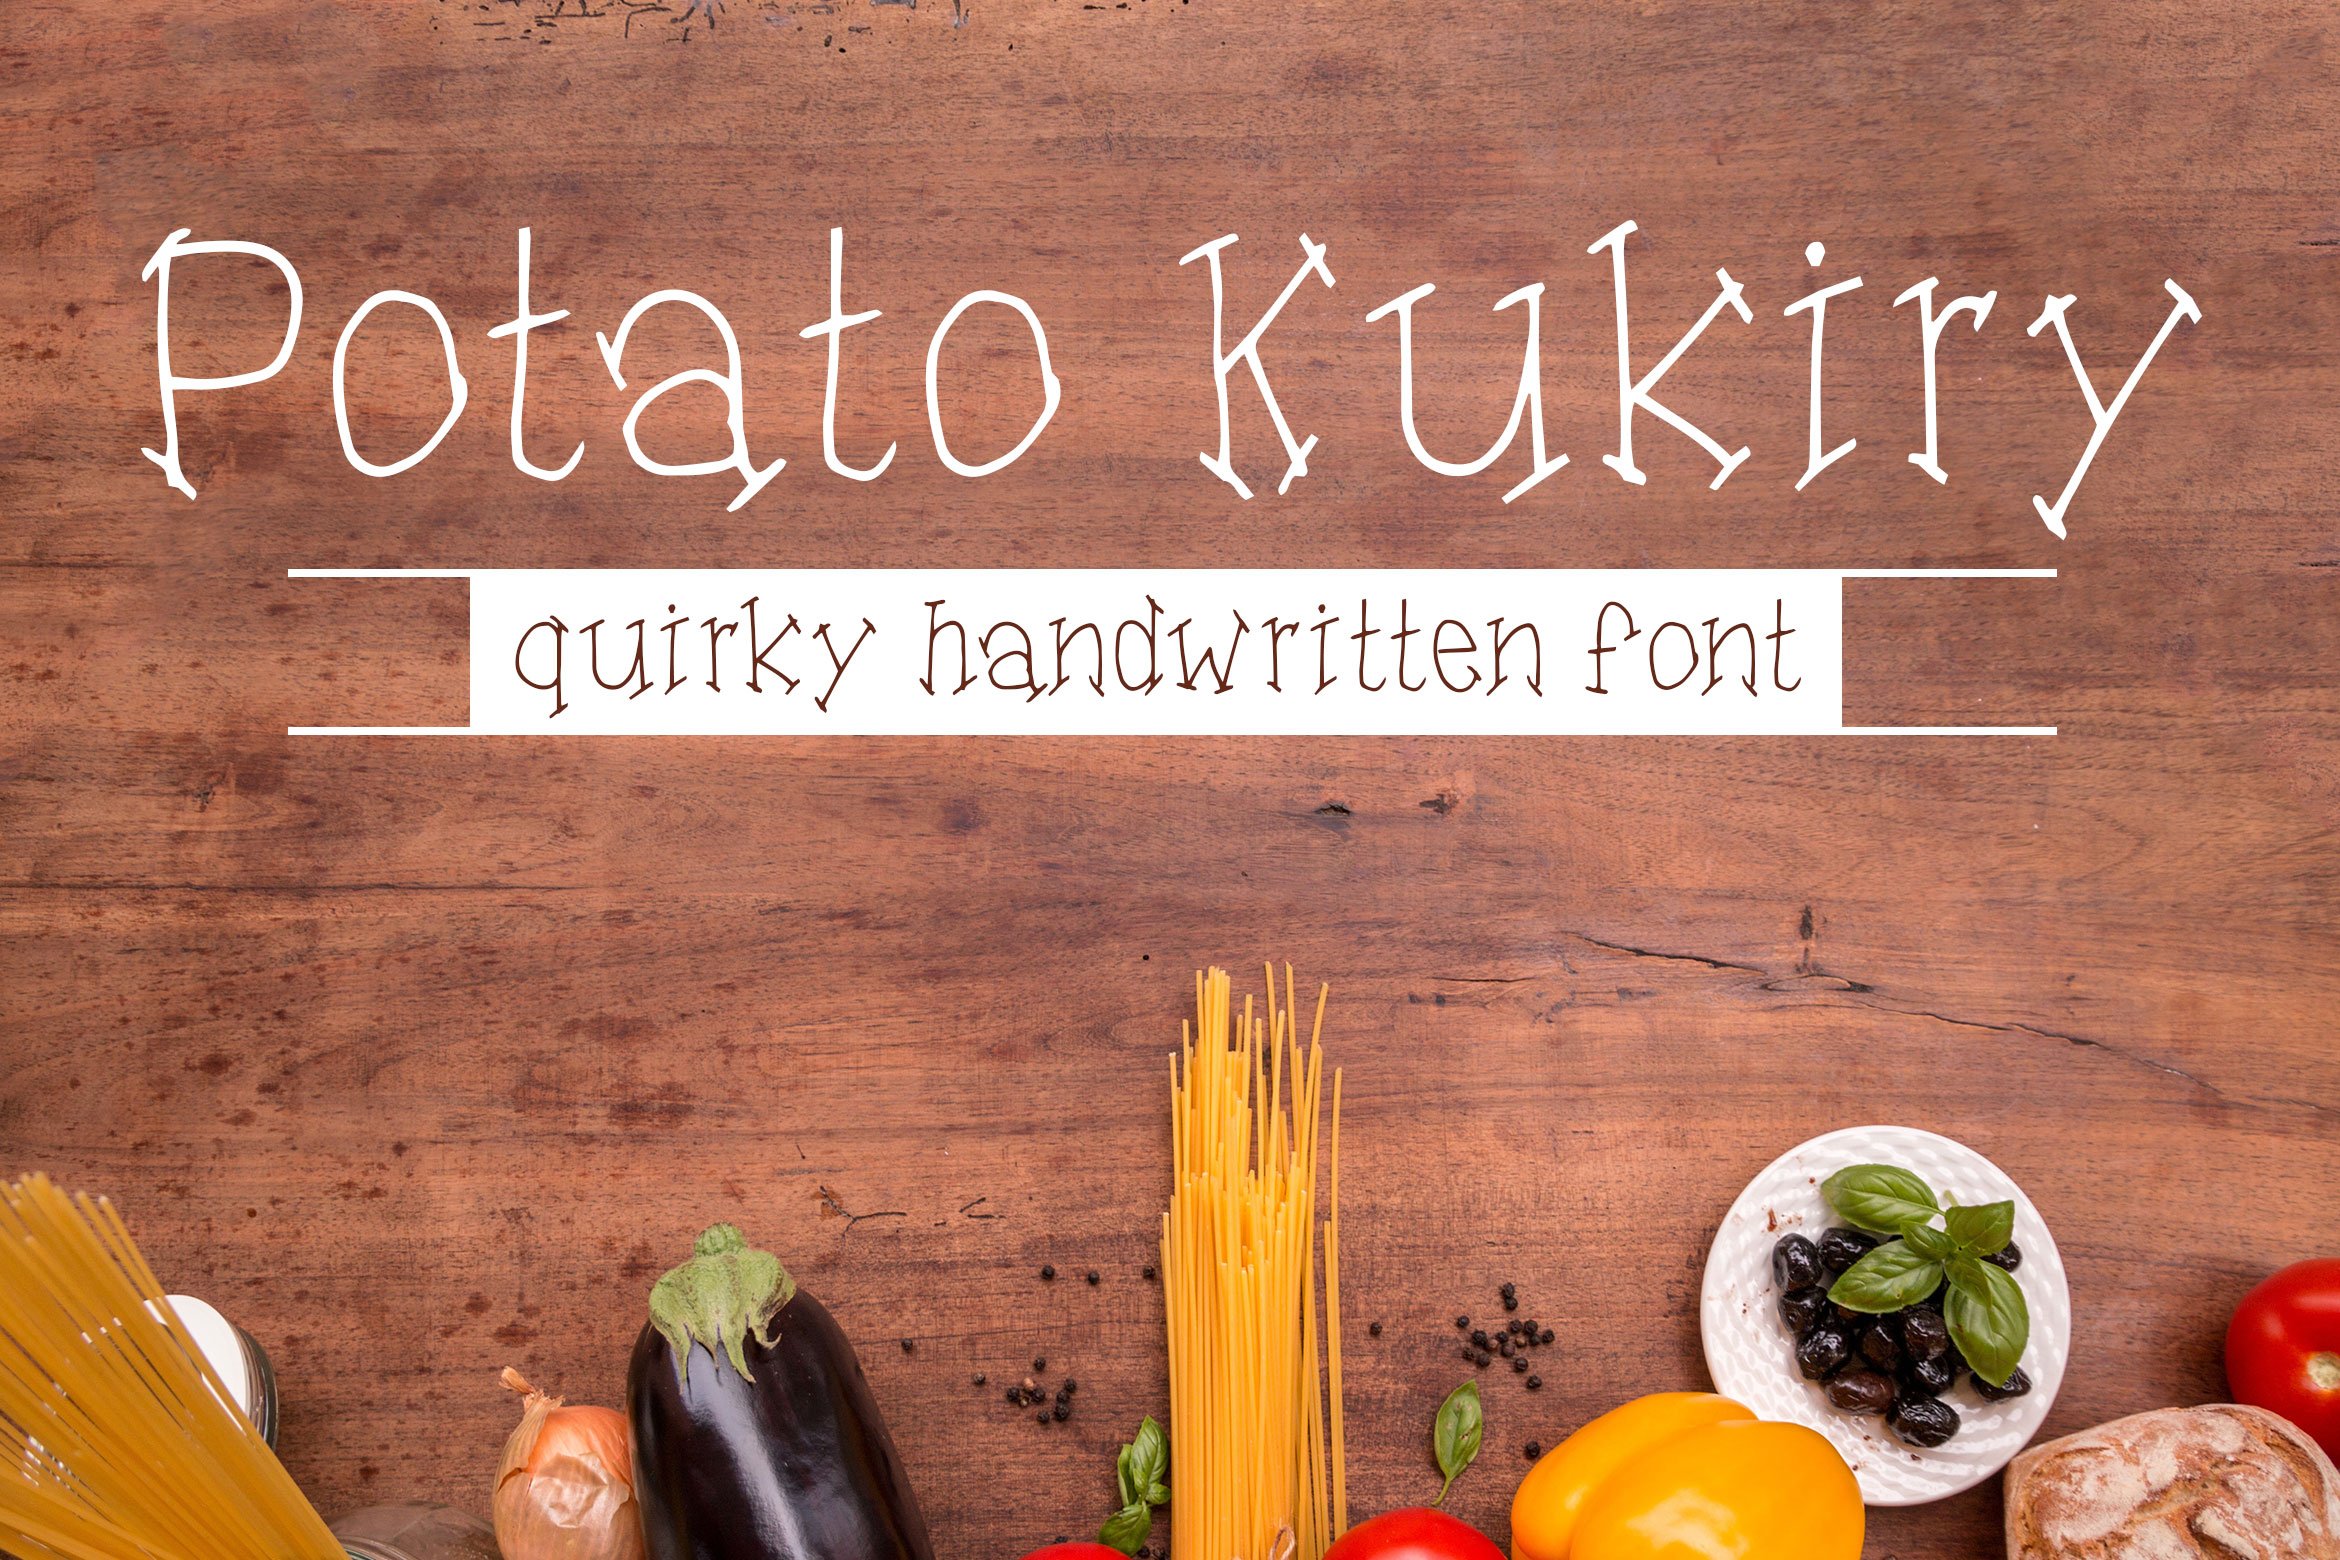 Potato Kukiry - Quirky Fun Font cover image.